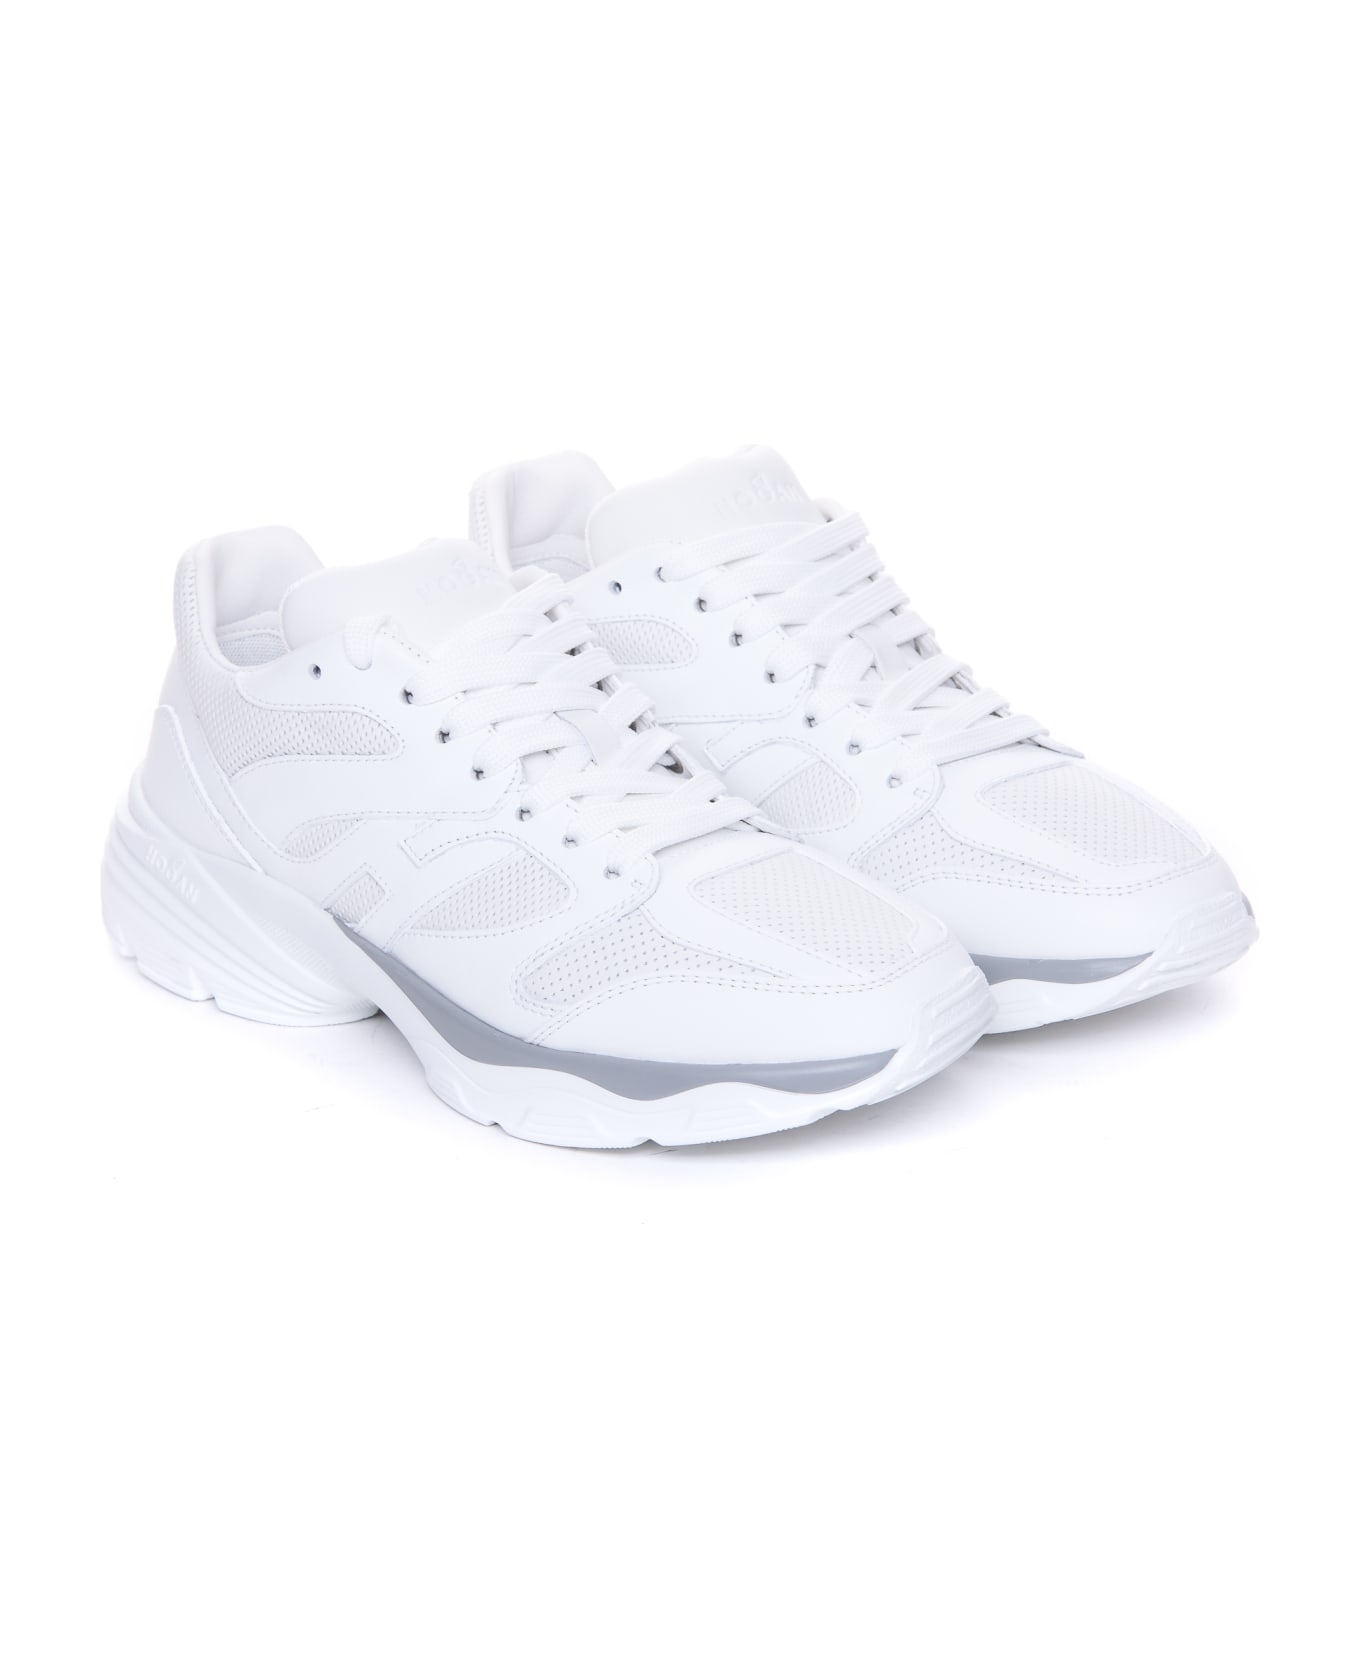 Hogan H665 Sneakers - White